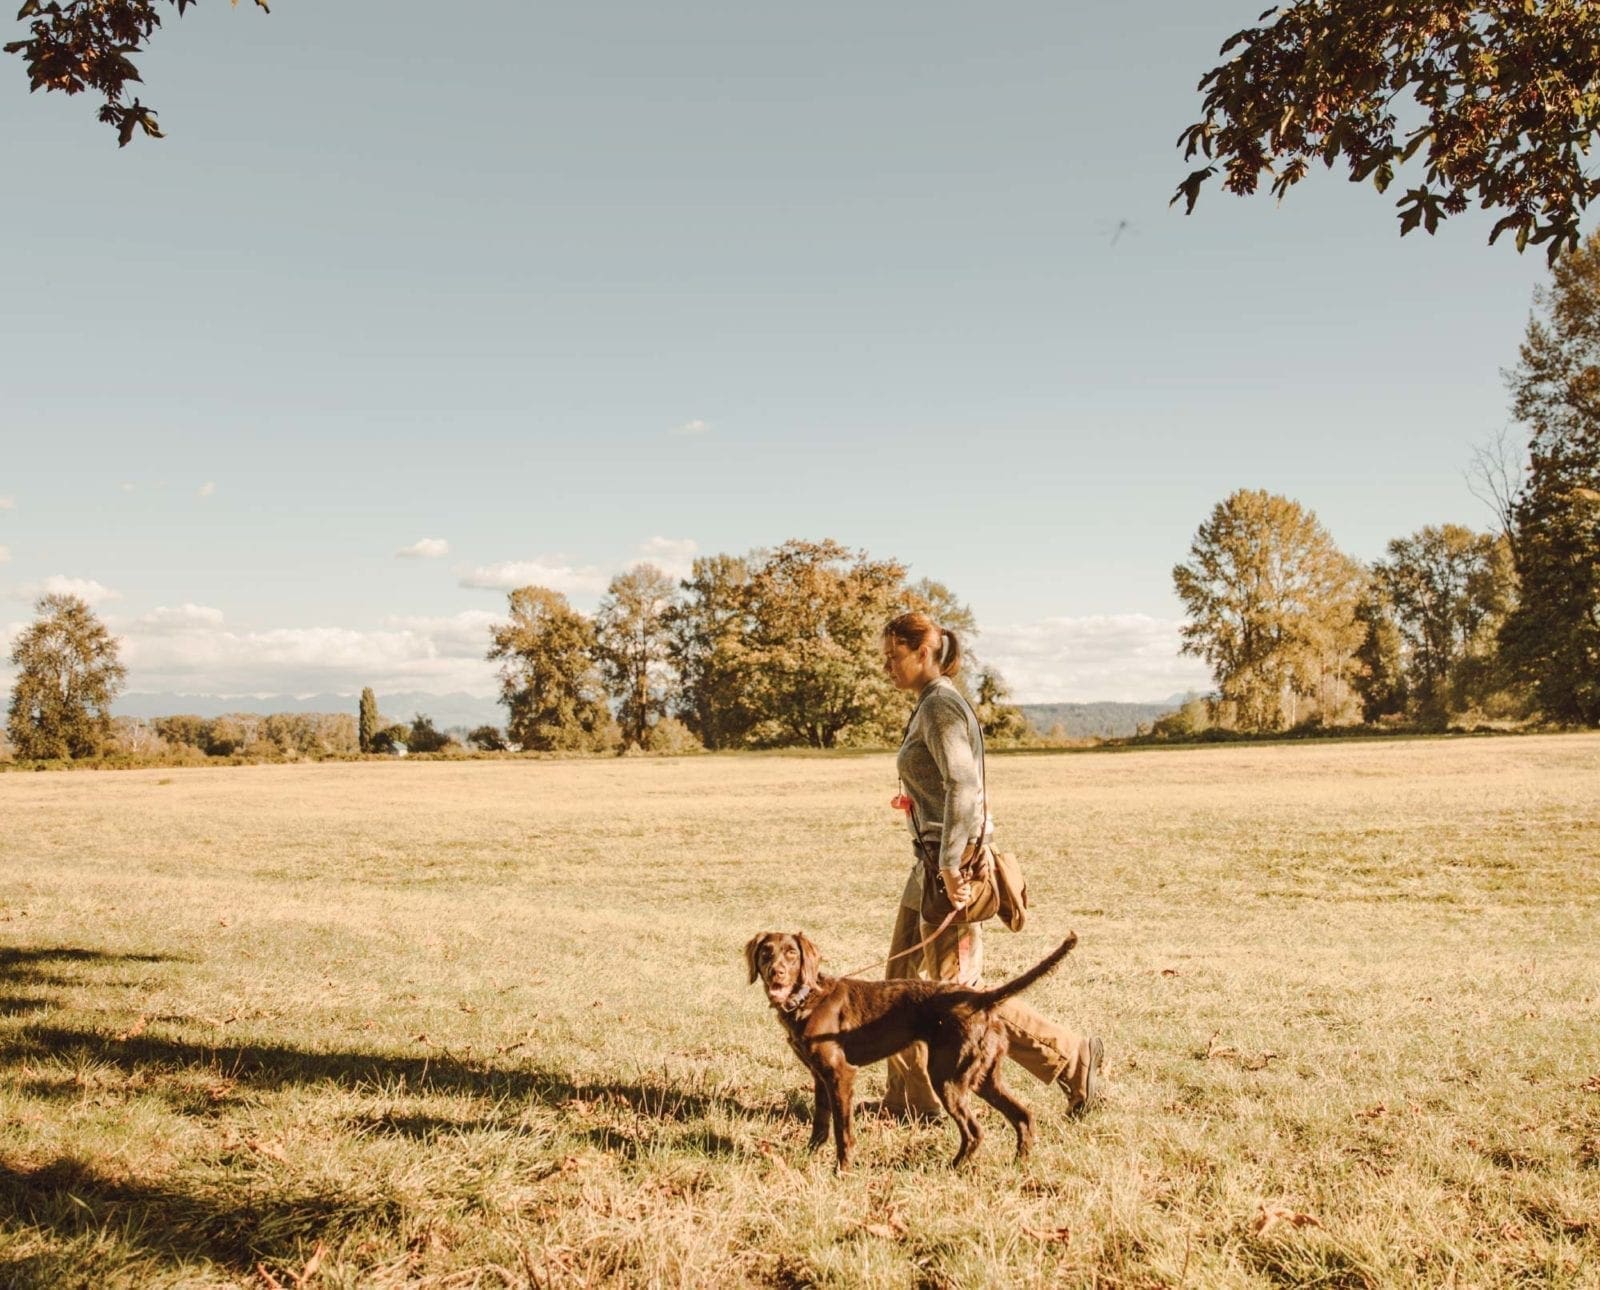 A bird dog trainer works a dog alone in a field